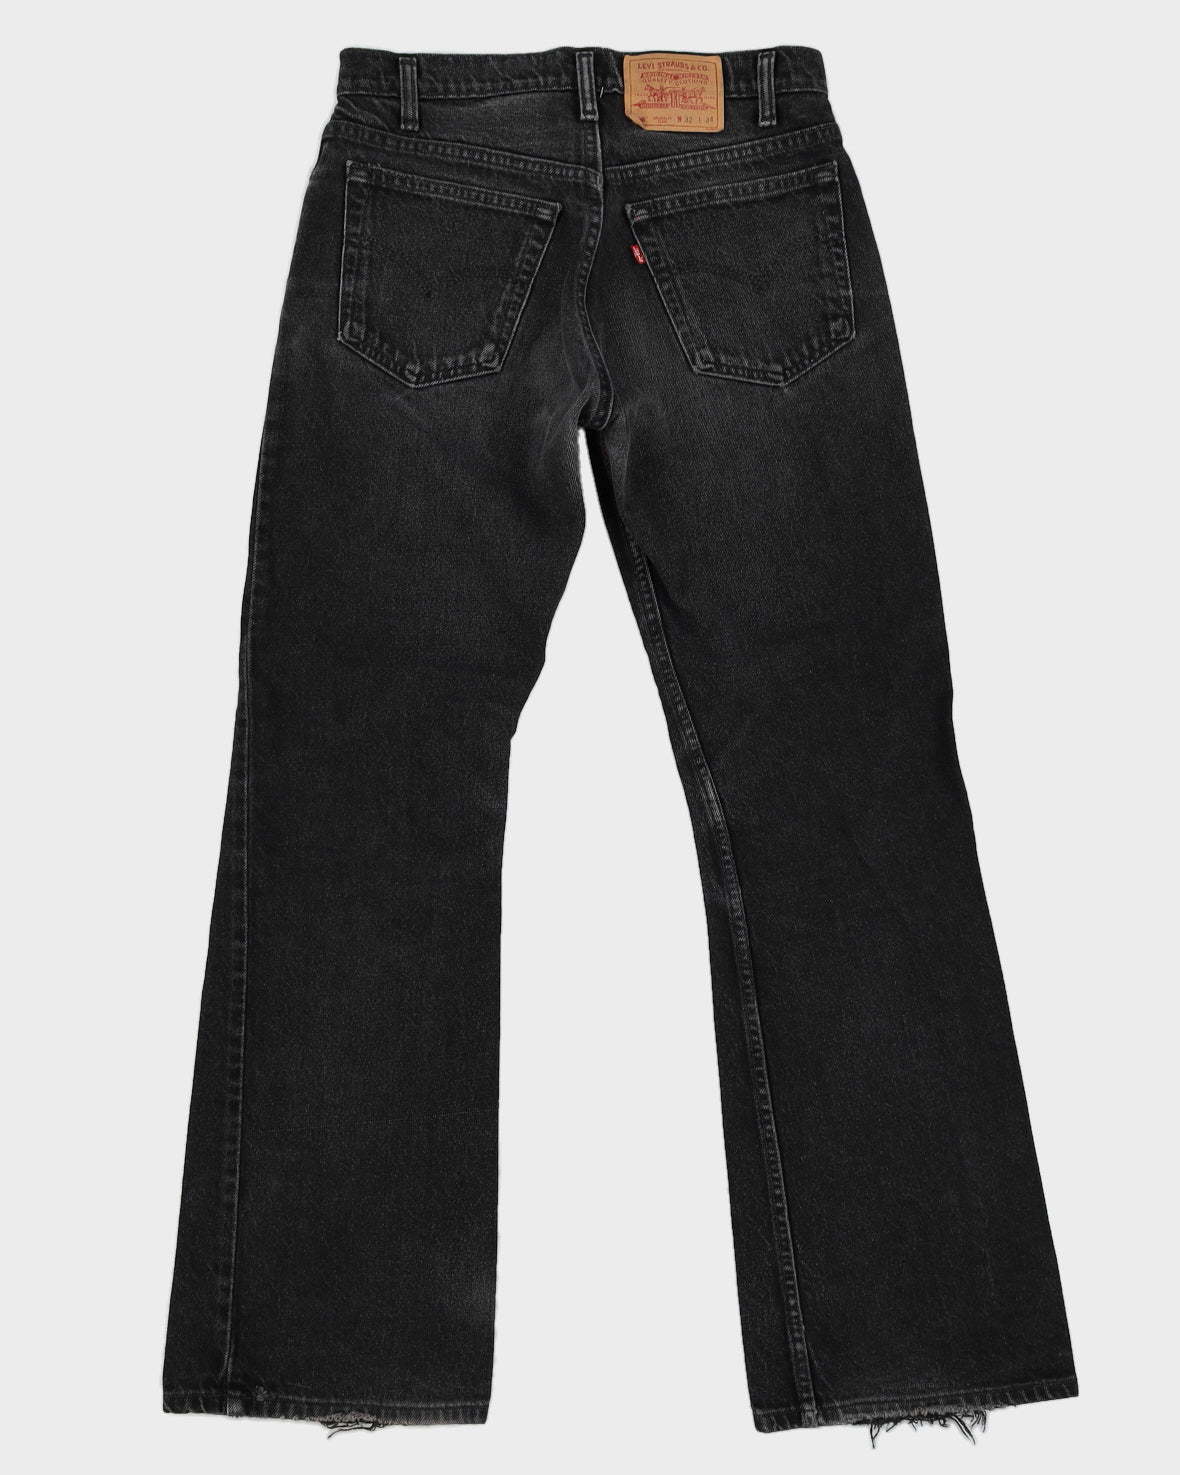 Vintage 80s Levi's Faded Black Jeans - W32 L34